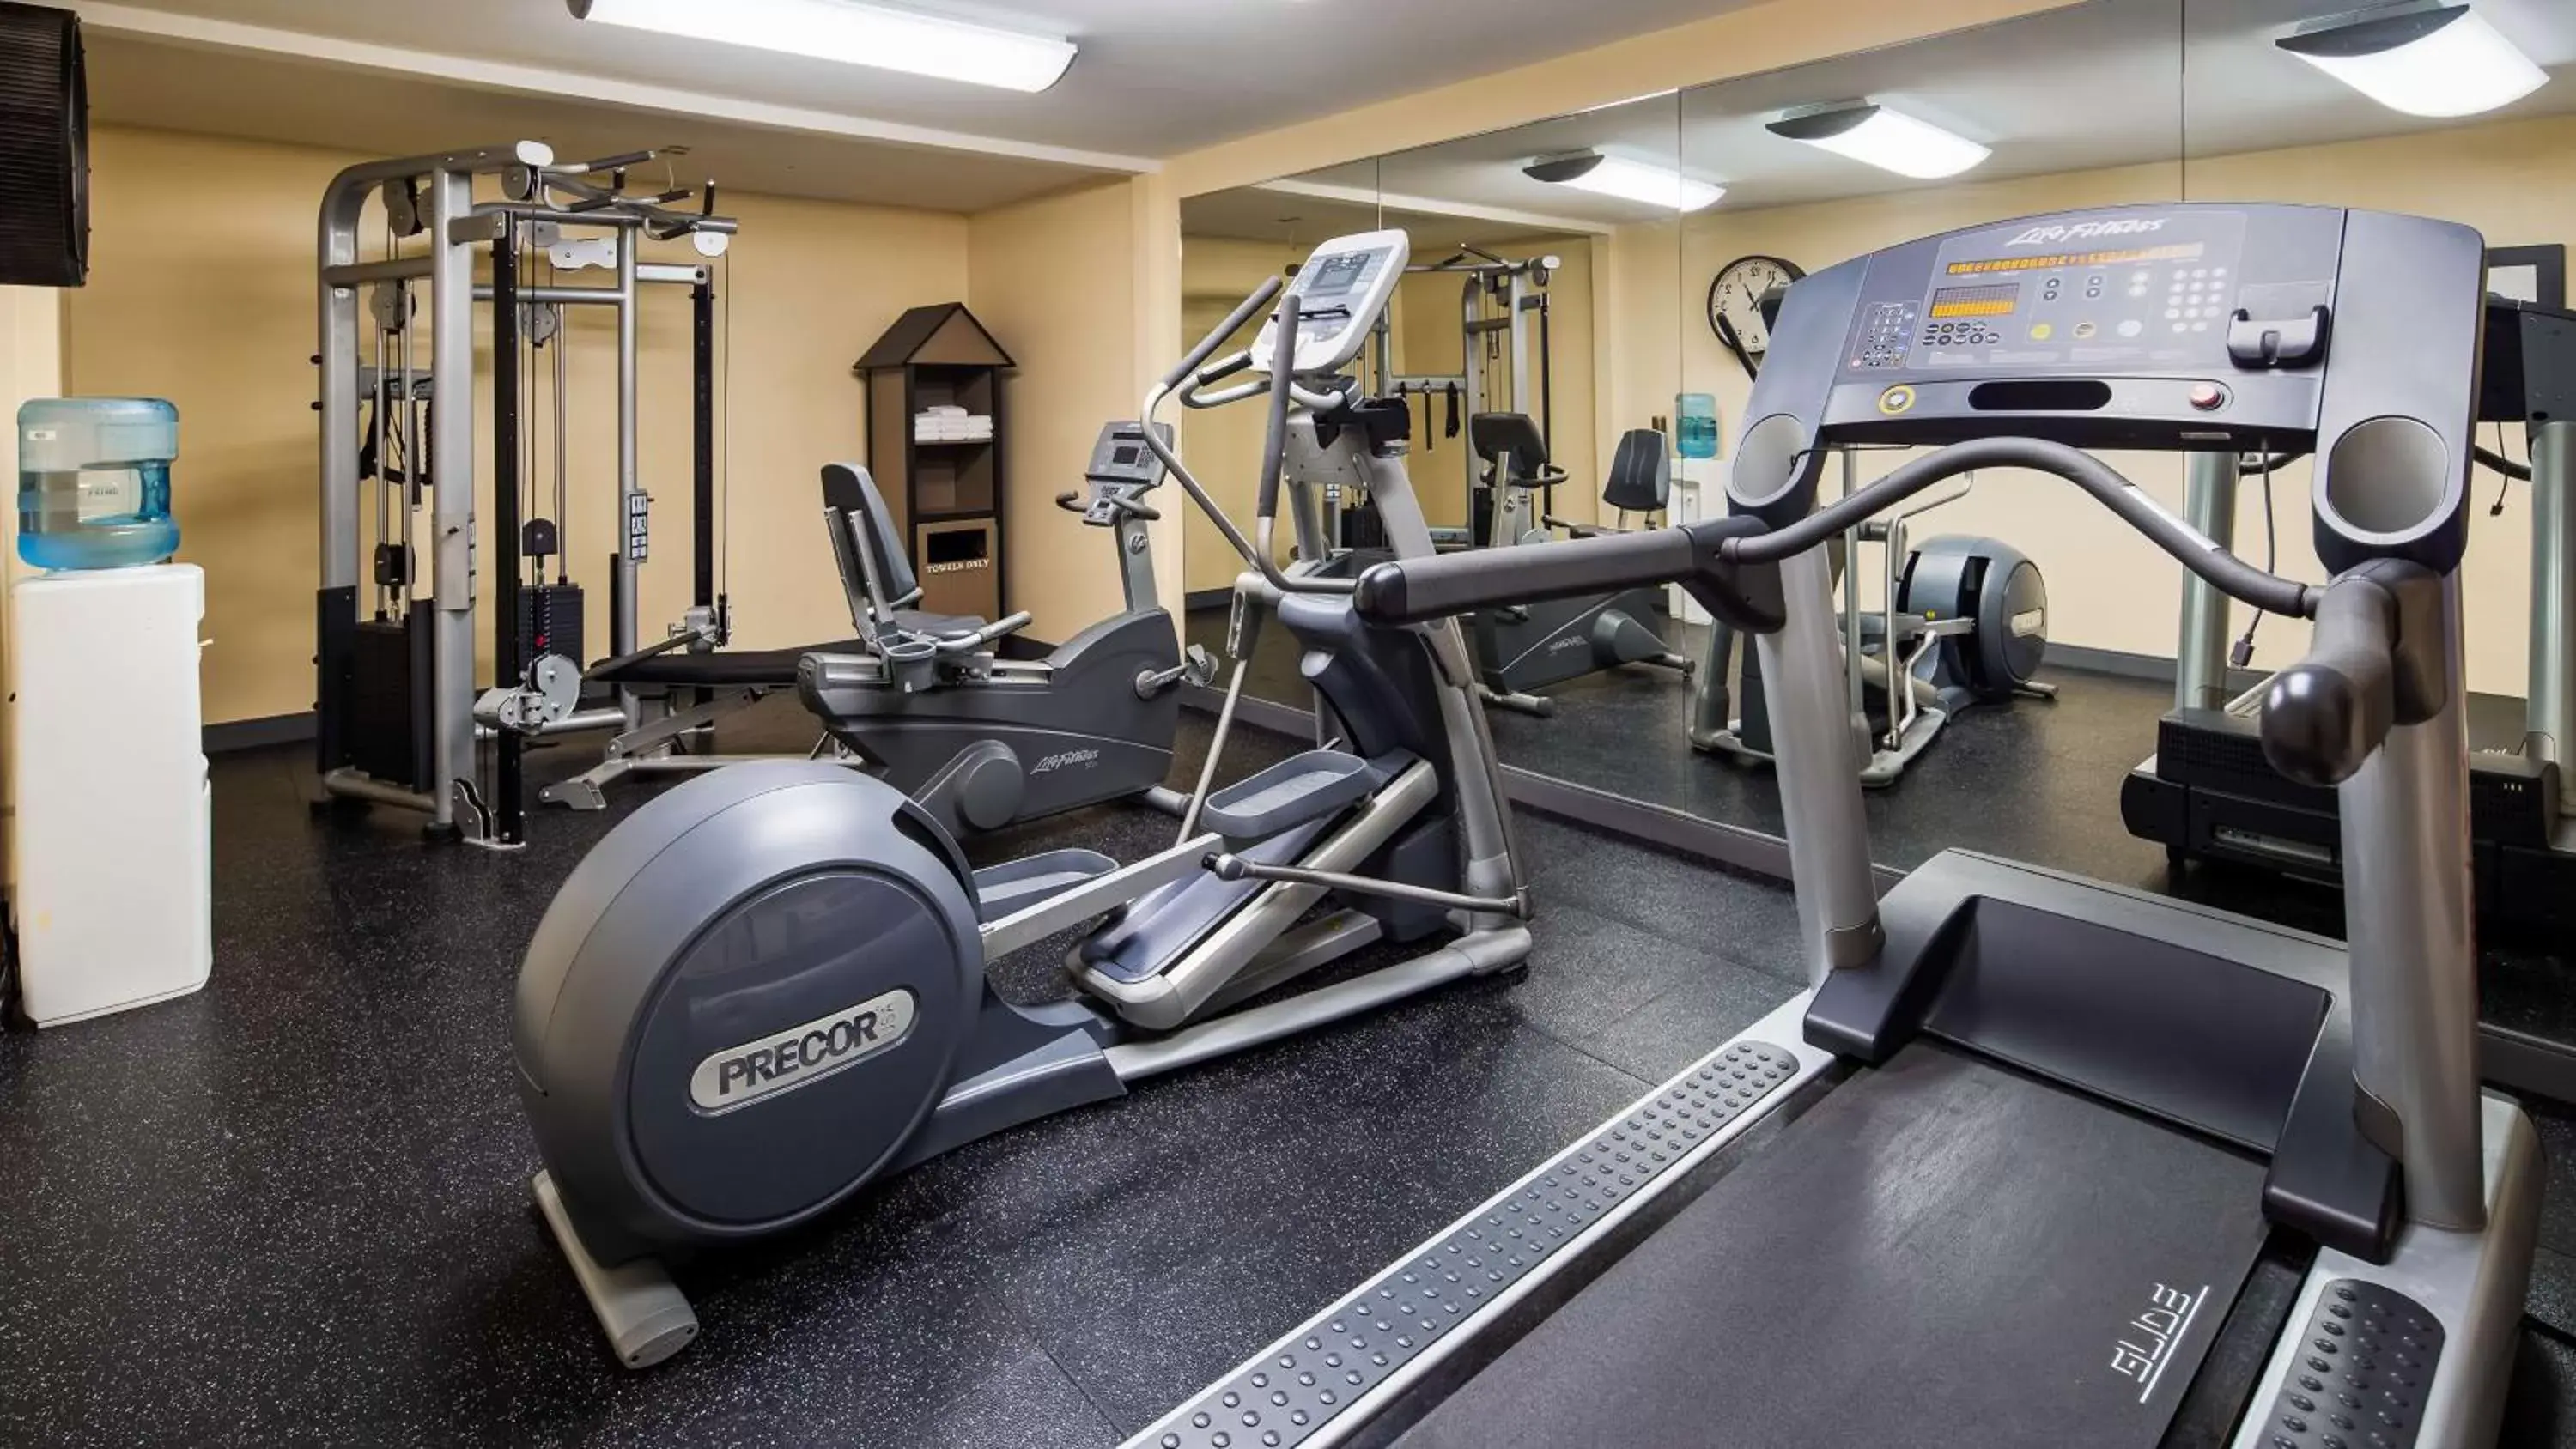 Fitness centre/facilities, Fitness Center/Facilities in Best Western Shenandoah Inn